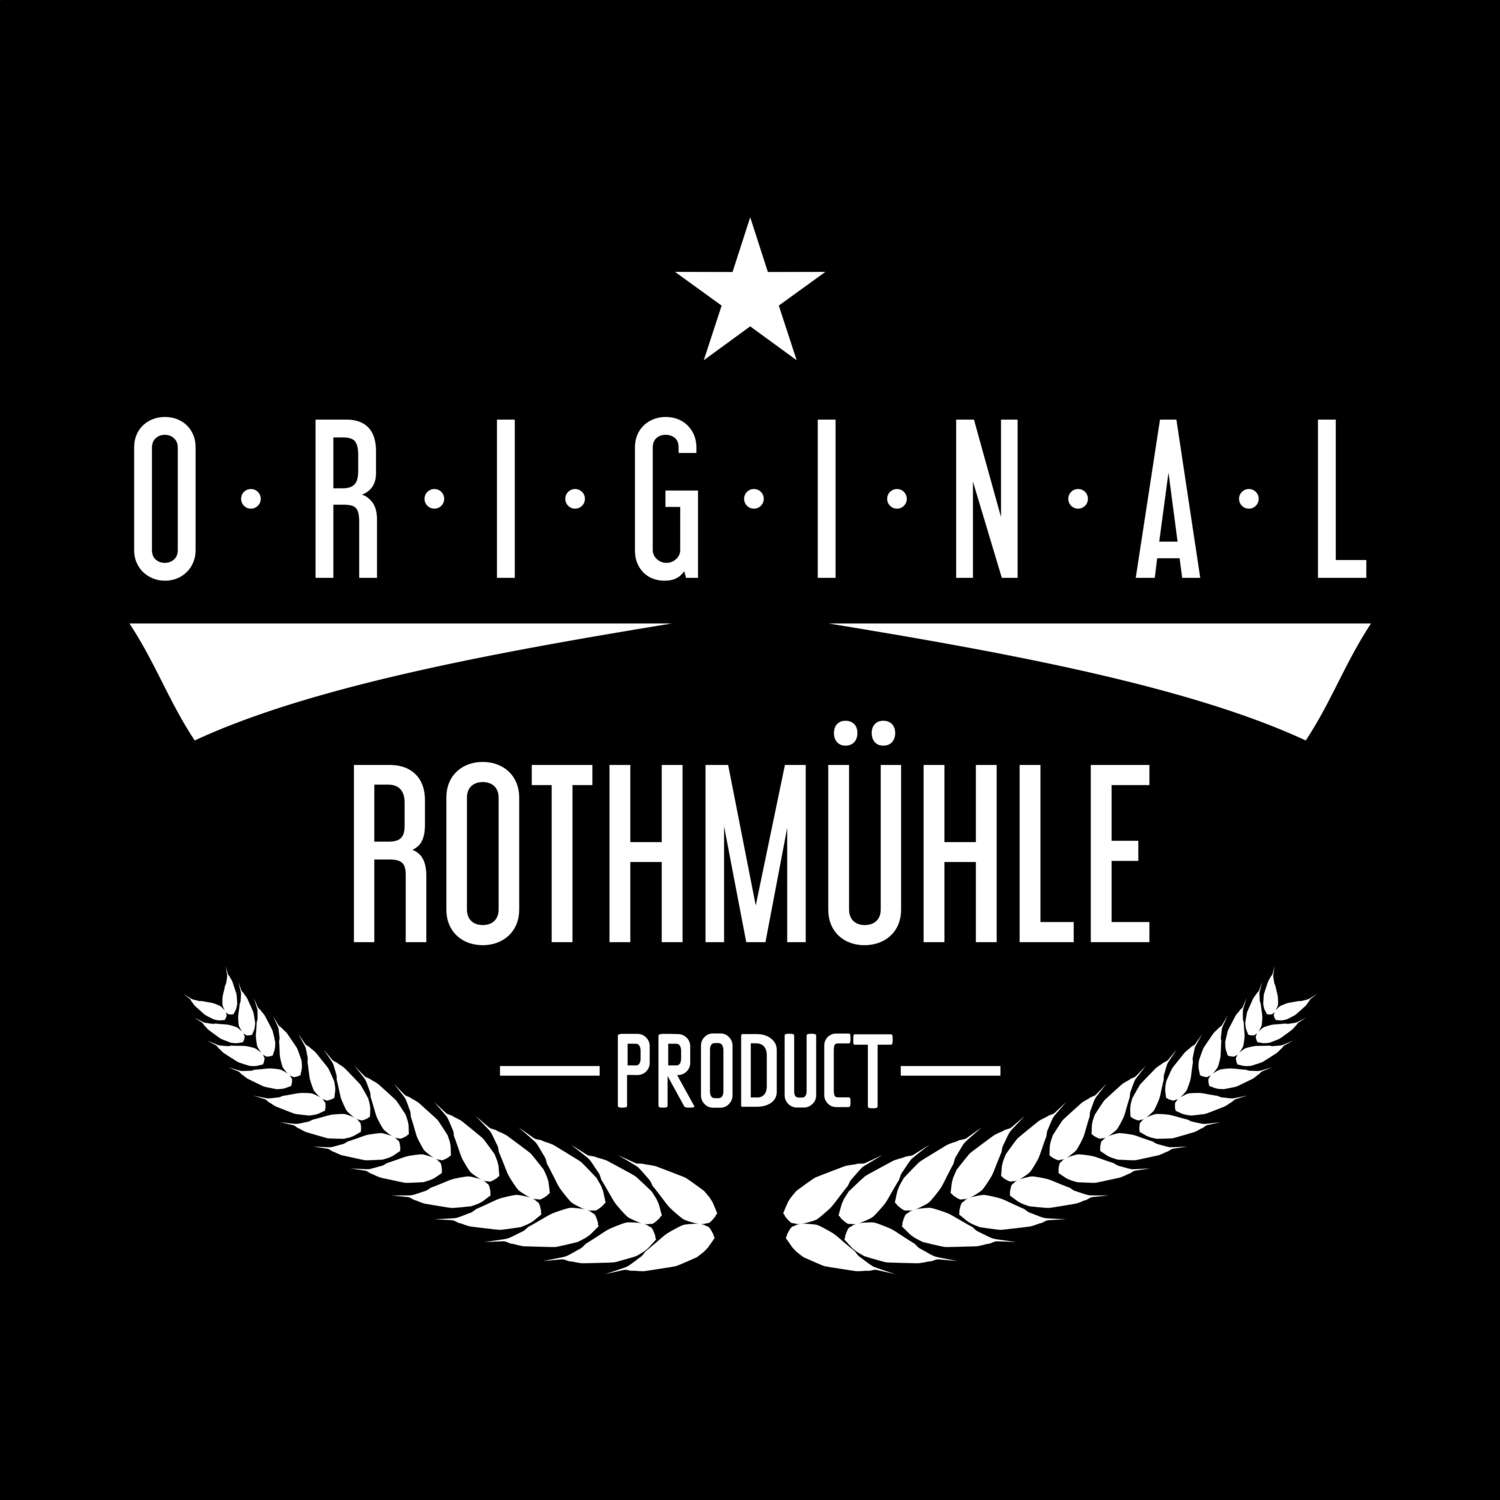 Rothmühle T-Shirt »Original Product«